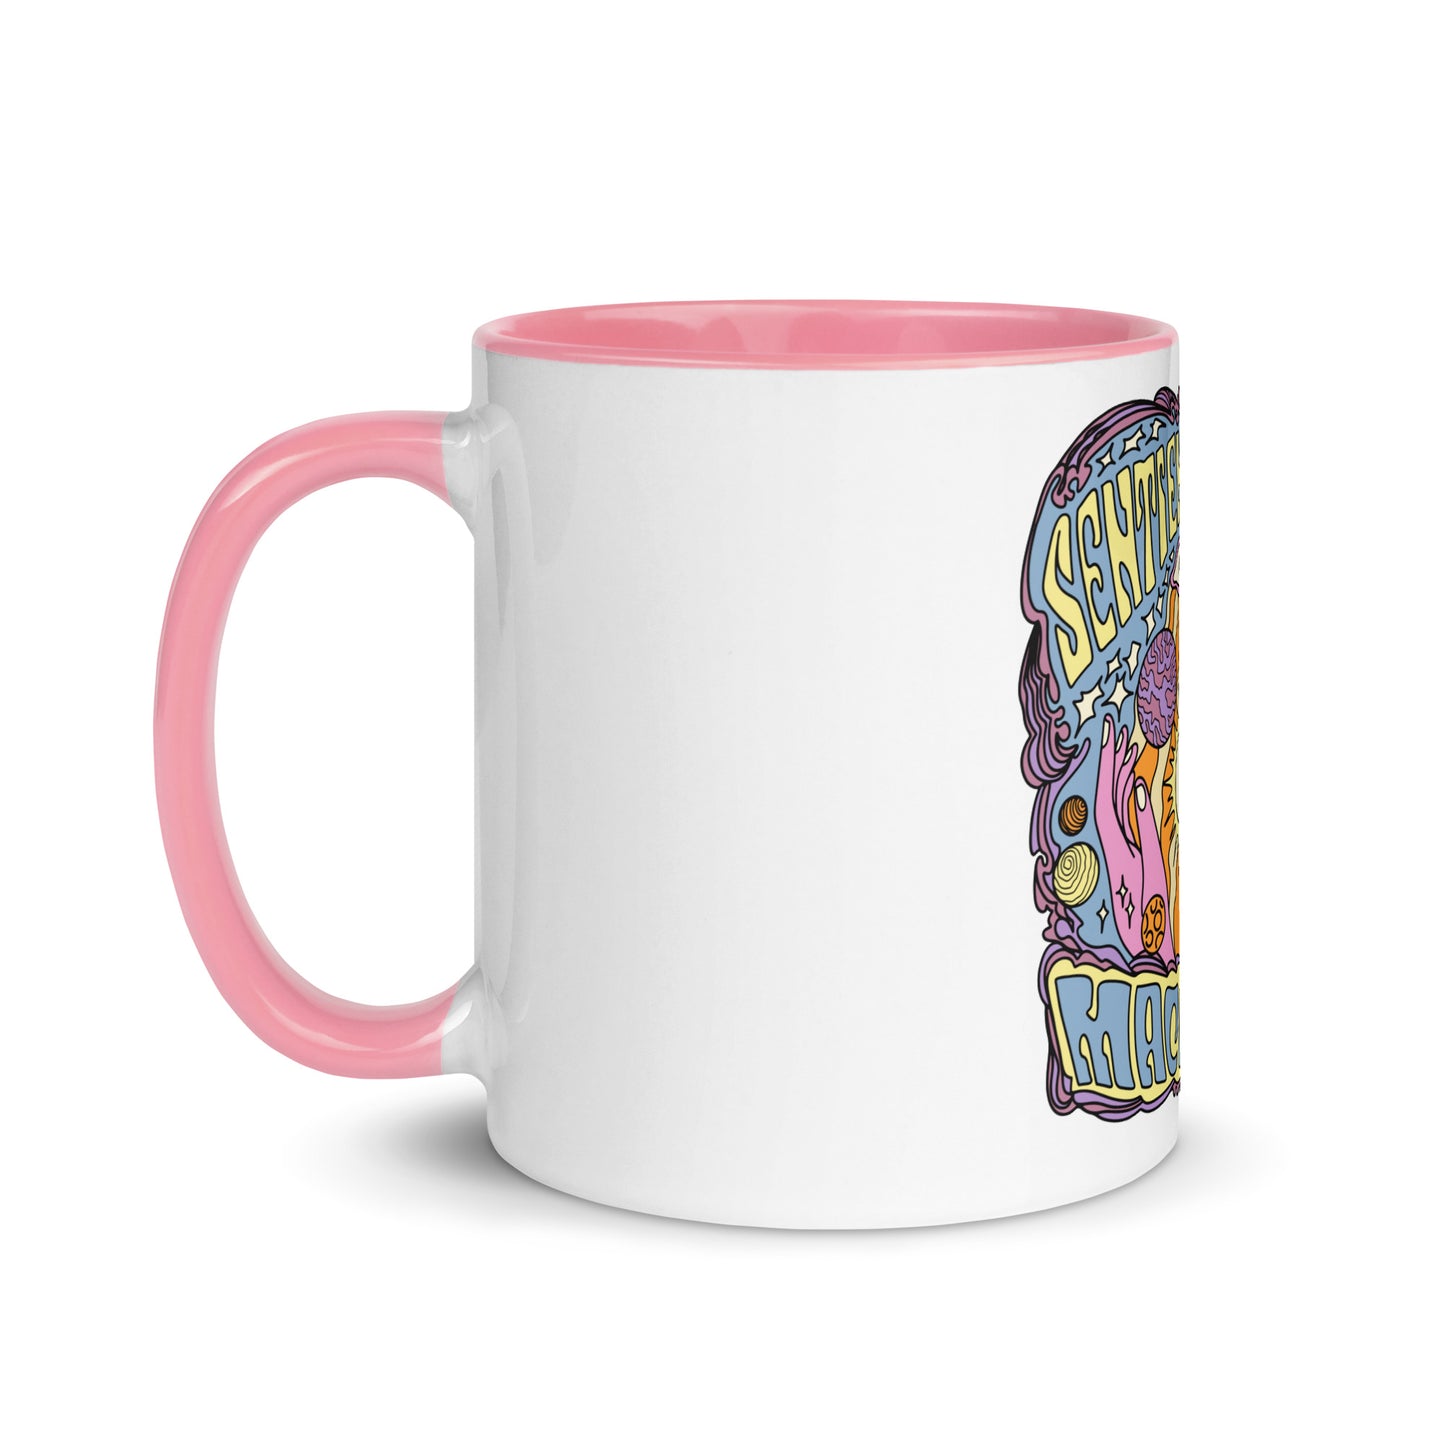 Super Space Mystic Mug w/ Color Inside